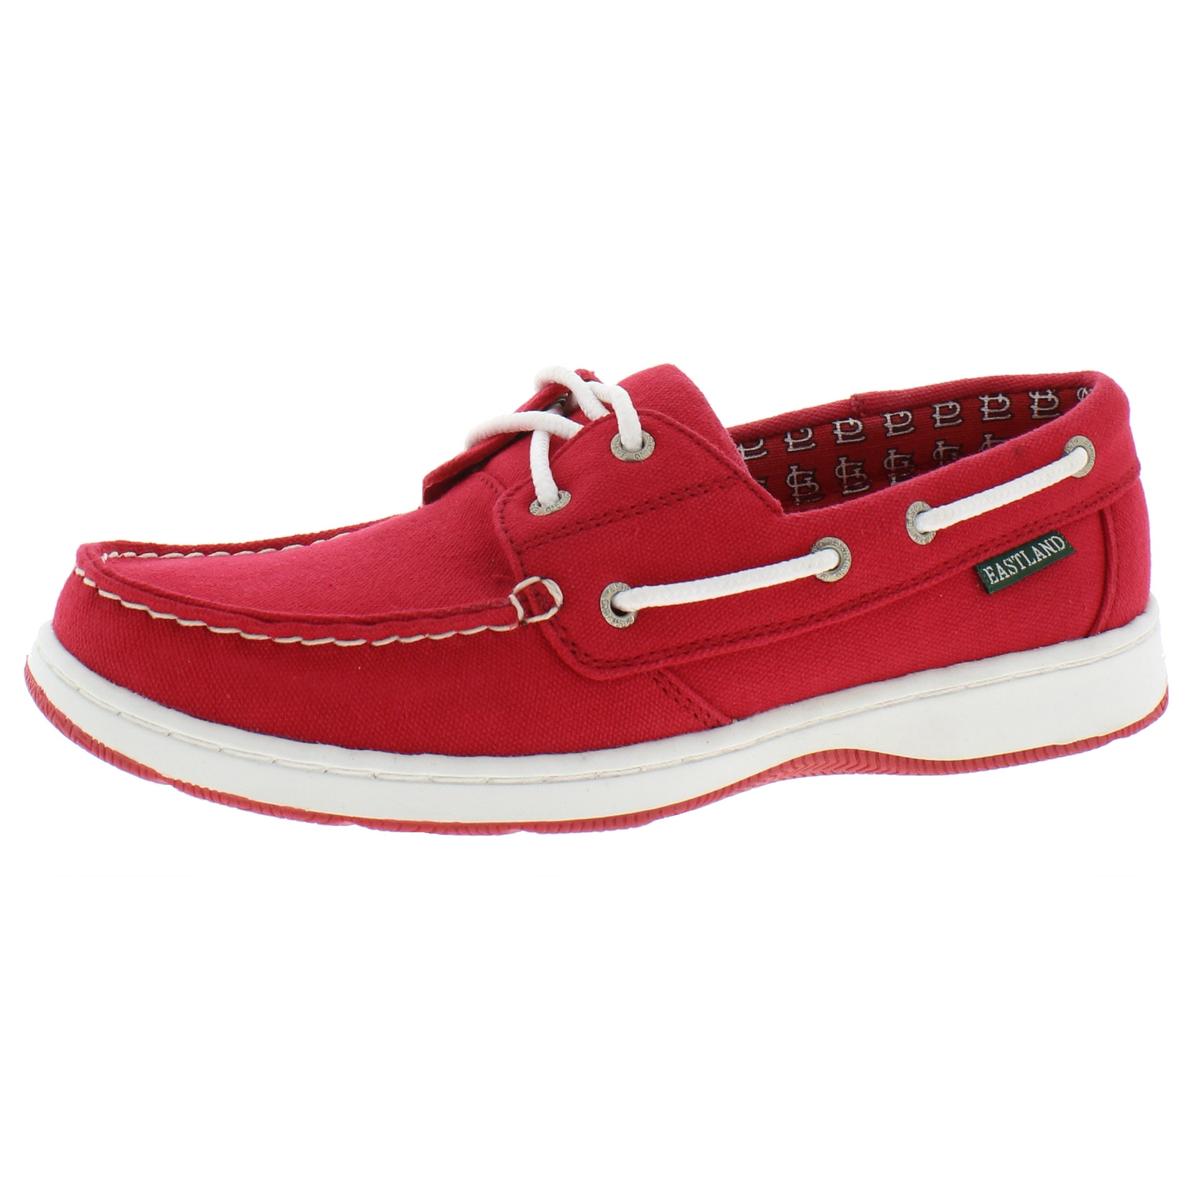 Eastland Womens Solstice MLB Red Boat Shoes Flats 6.5 Medium (B,M) BHFO ...